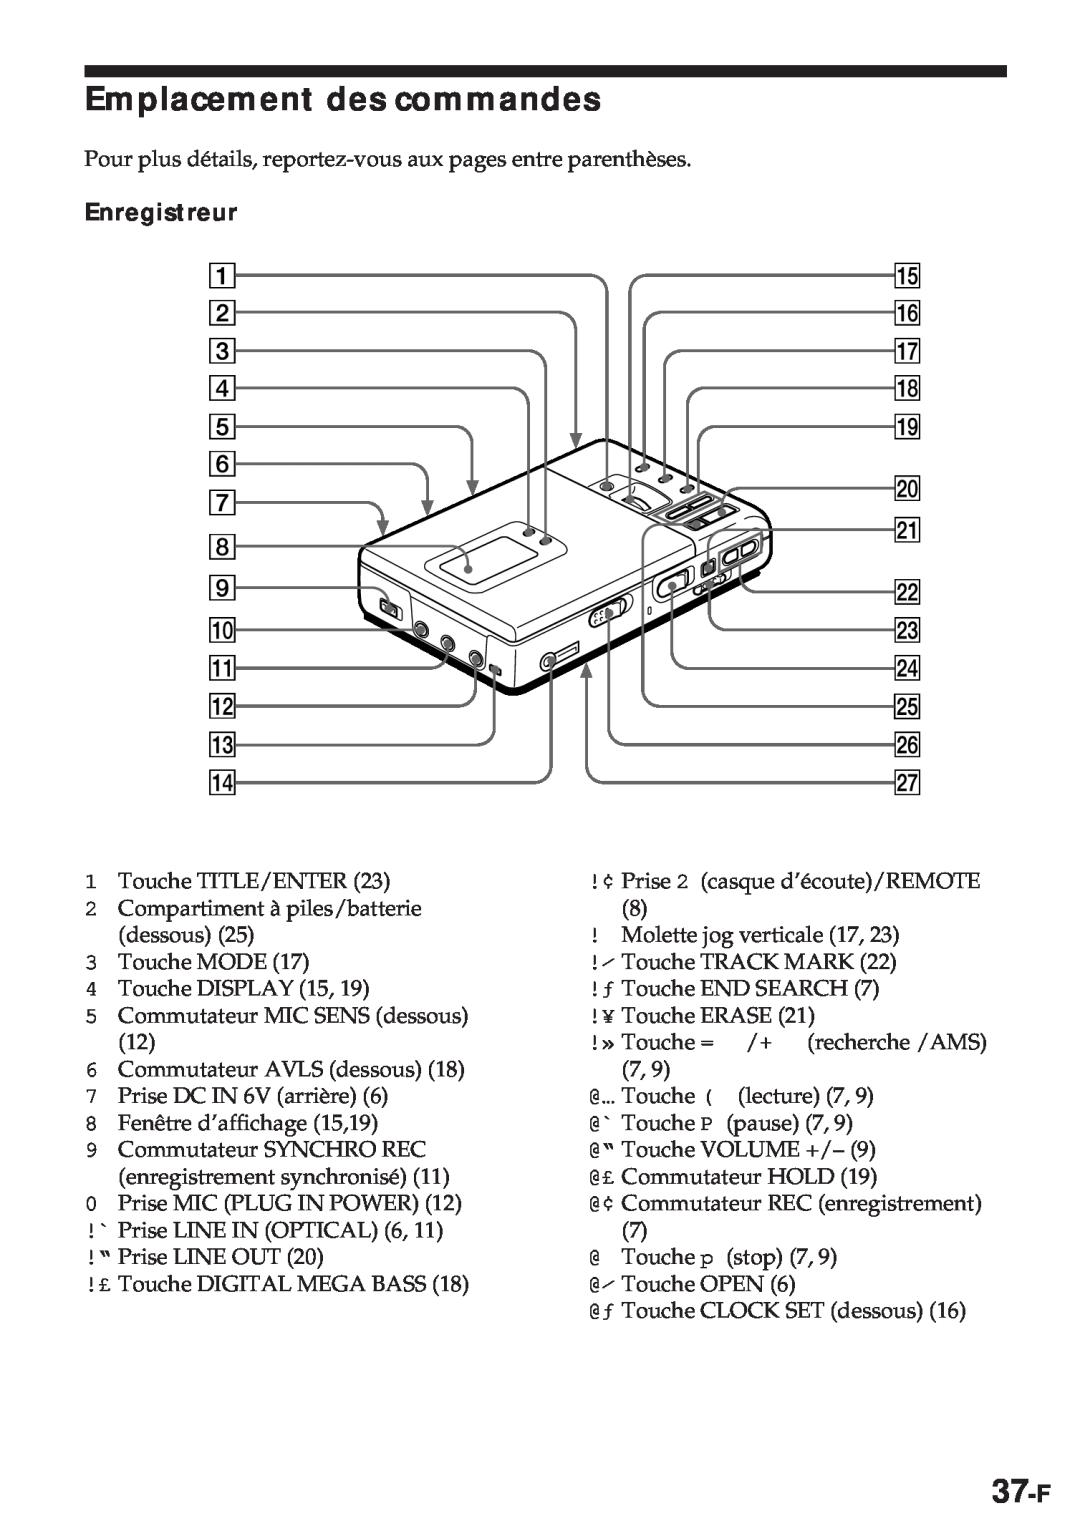 Sony MZ-R30 operating instructions Emplacement des commandes, 37-F, Enregistreur 